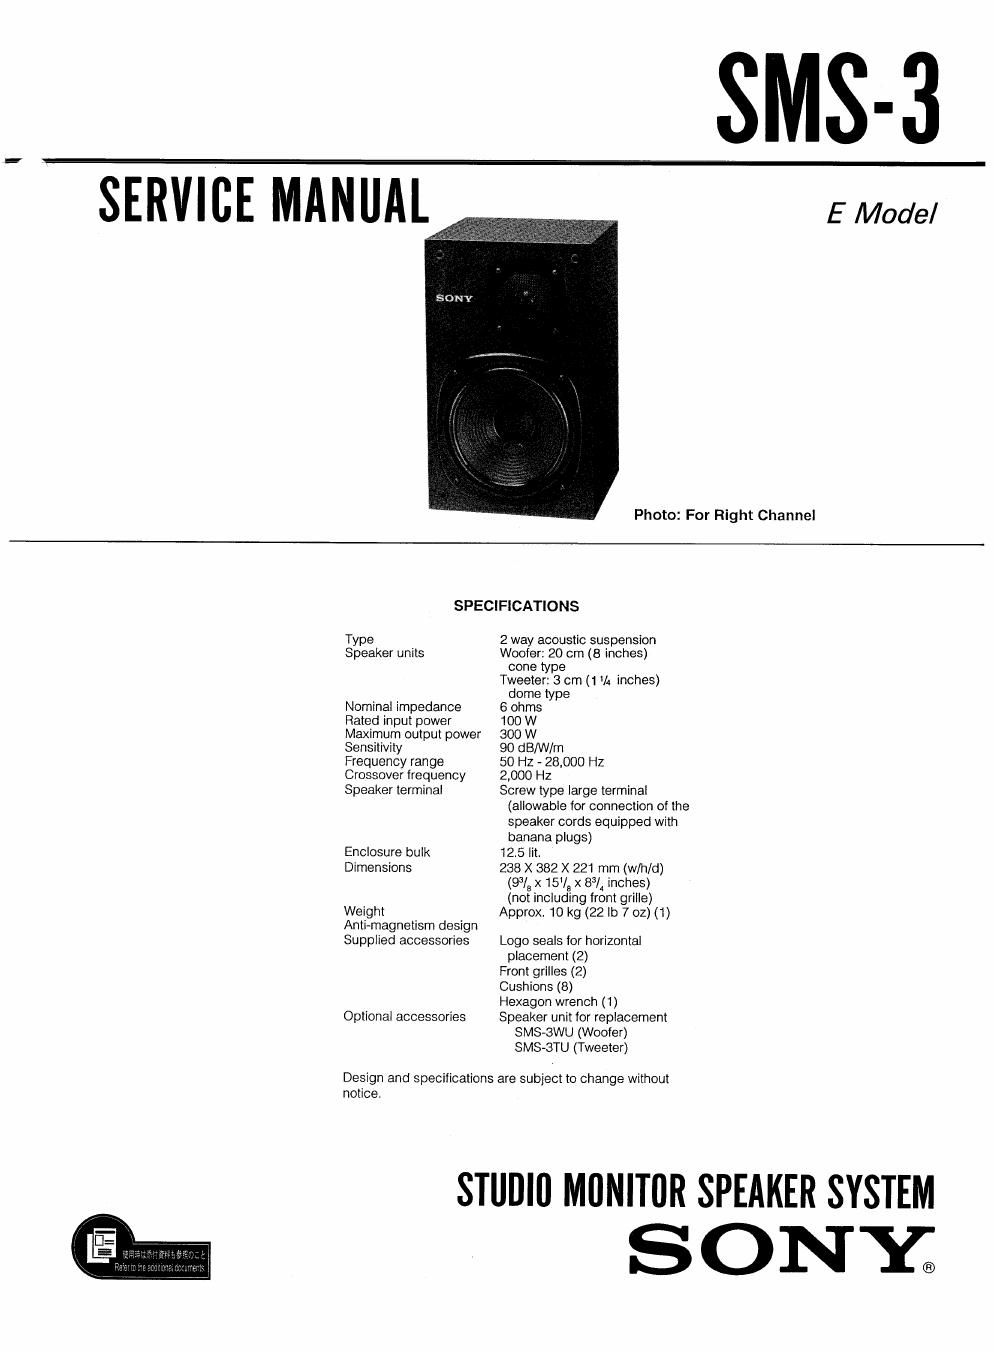 sony sms 3 service manual